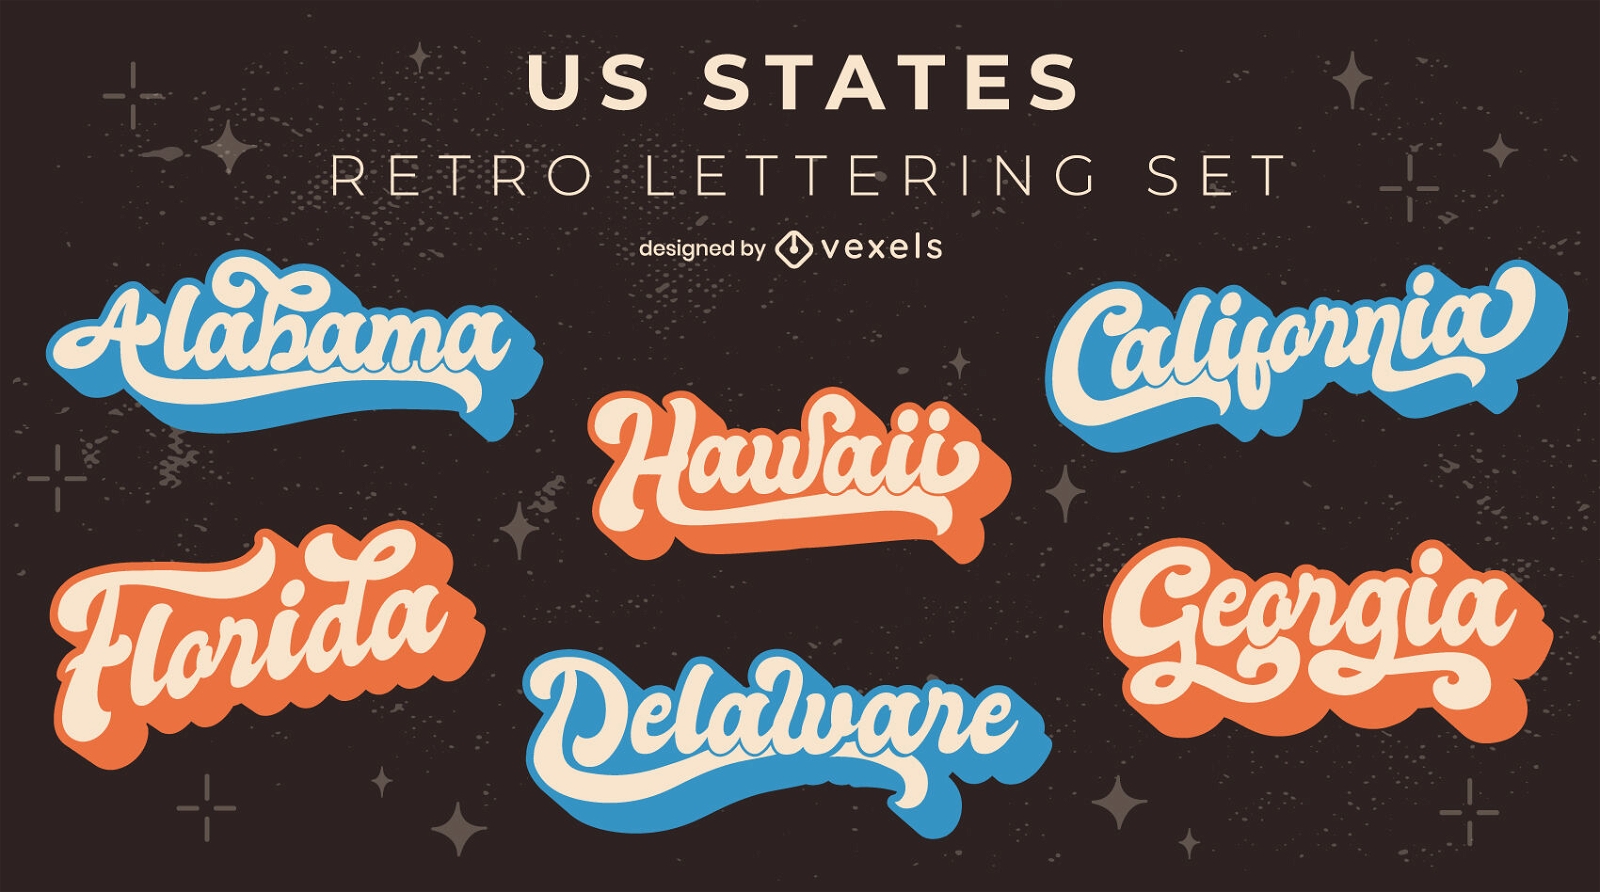 USA states retro lettering set